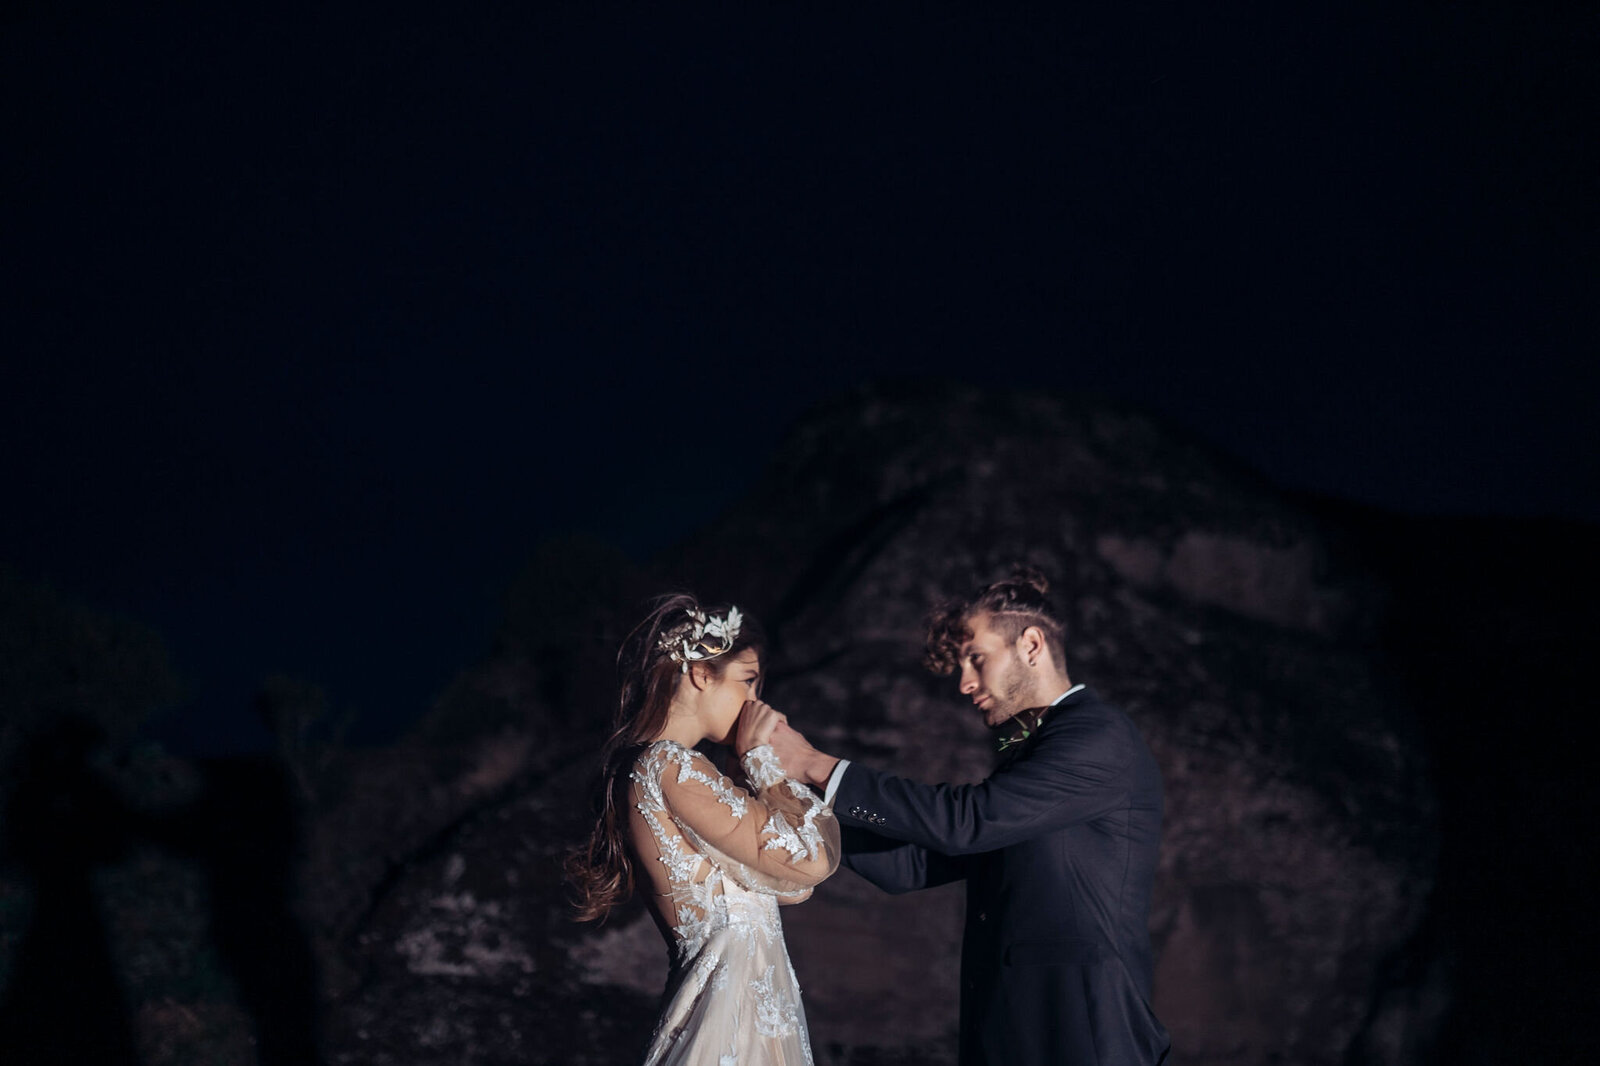 303-Meteora-Kalabaka-Greece-Inspriation-Loves-Story Elopement-Cinematic-Romance-Destination-Wedding-Editorial-Luxury-Fine-Art-Lisa-Vigliotta-Photography